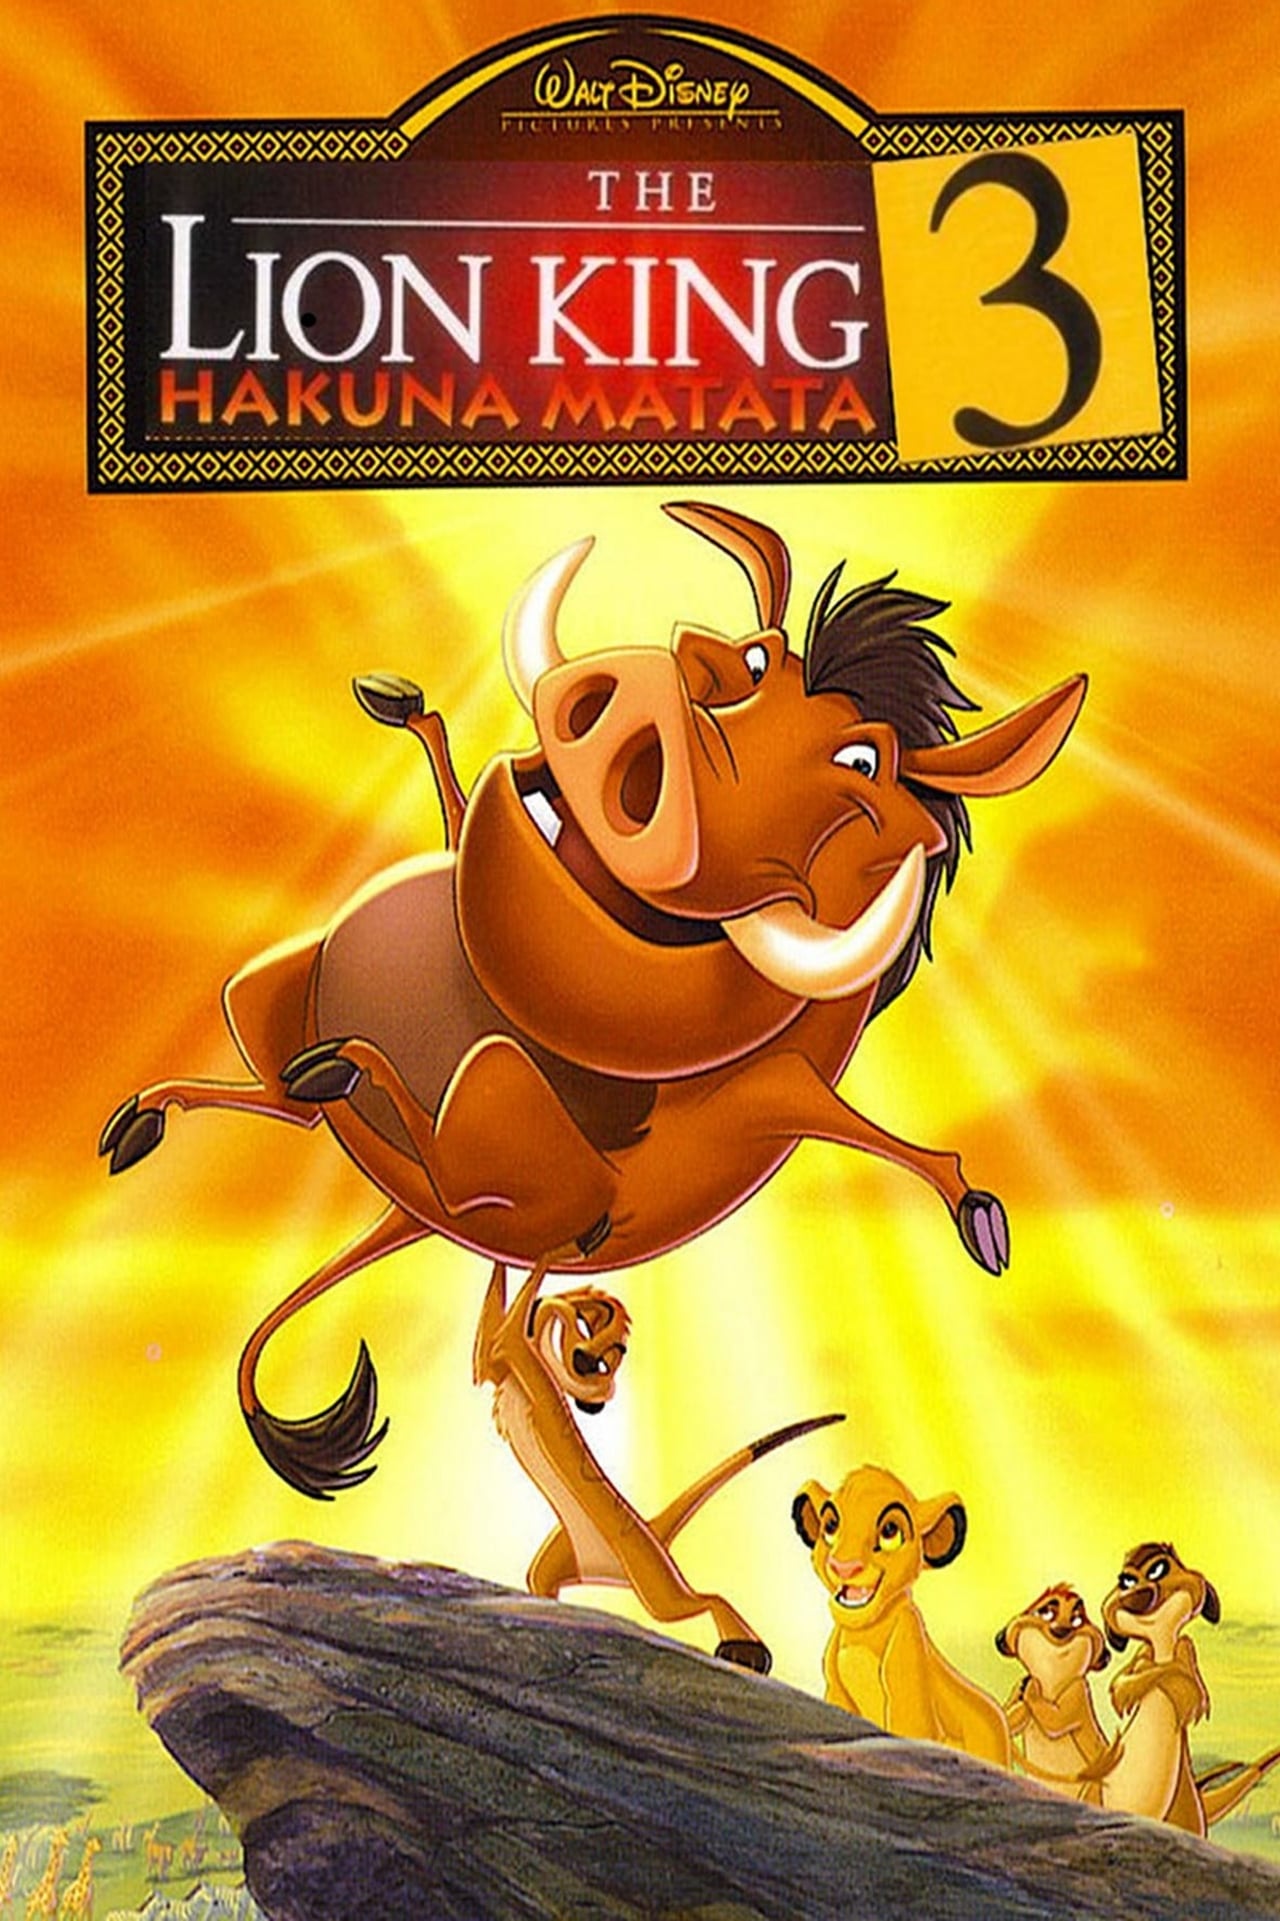 The Lion King 1½ subtitles English | opensubtitles.com